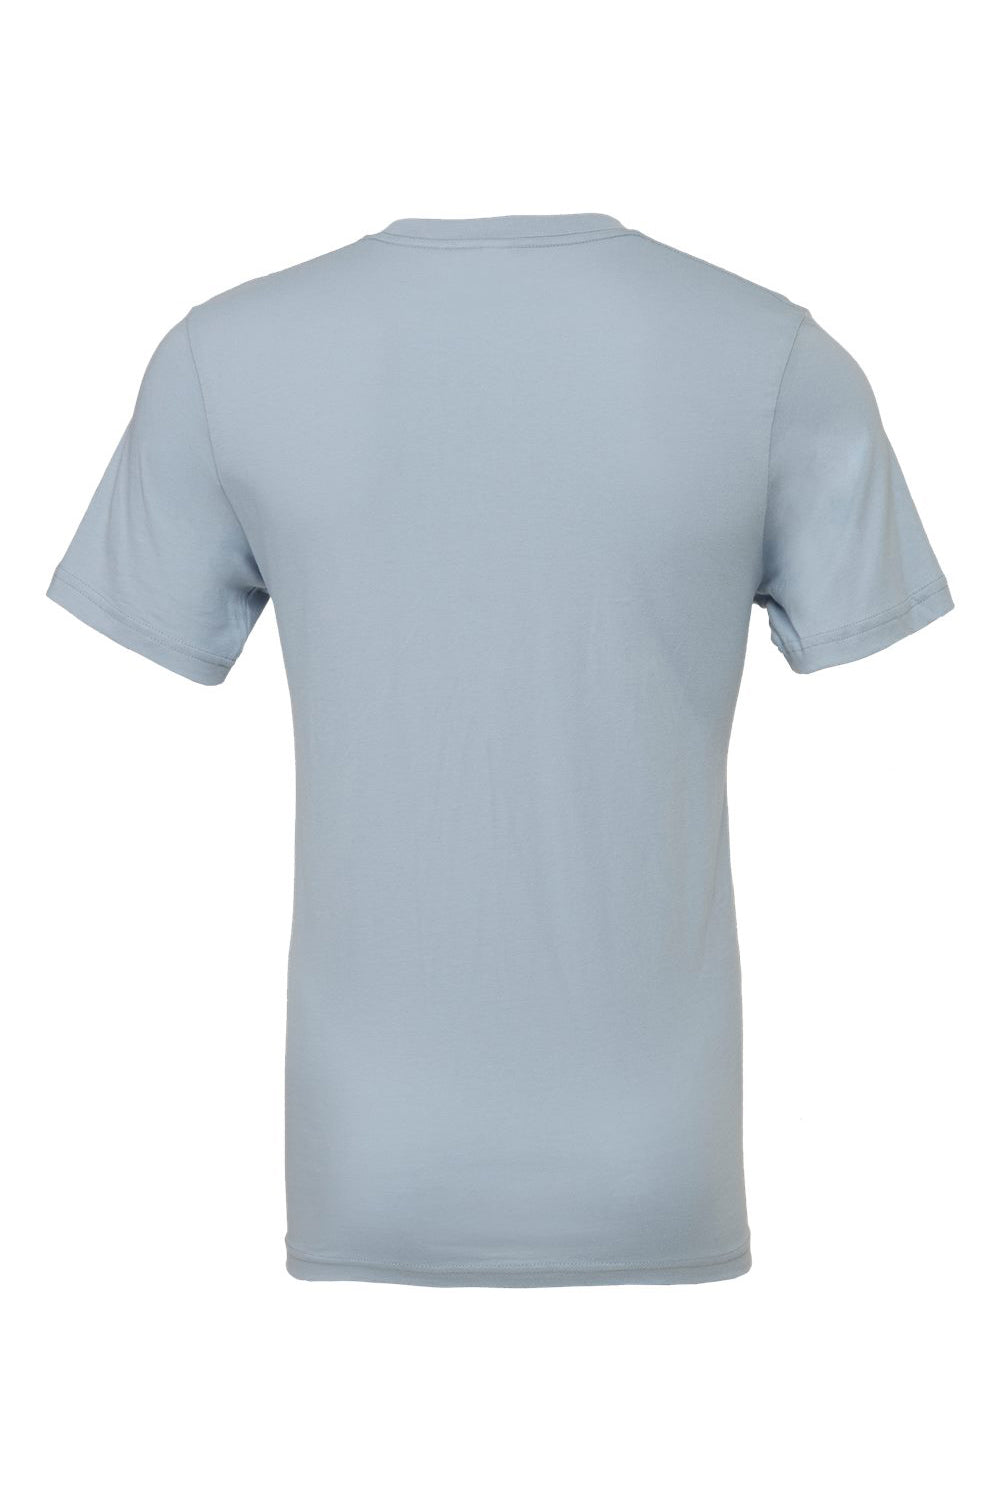 Bella + Canvas BC3001/3001C Mens Jersey Short Sleeve Crewneck T-Shirt Light Blue Flat Back